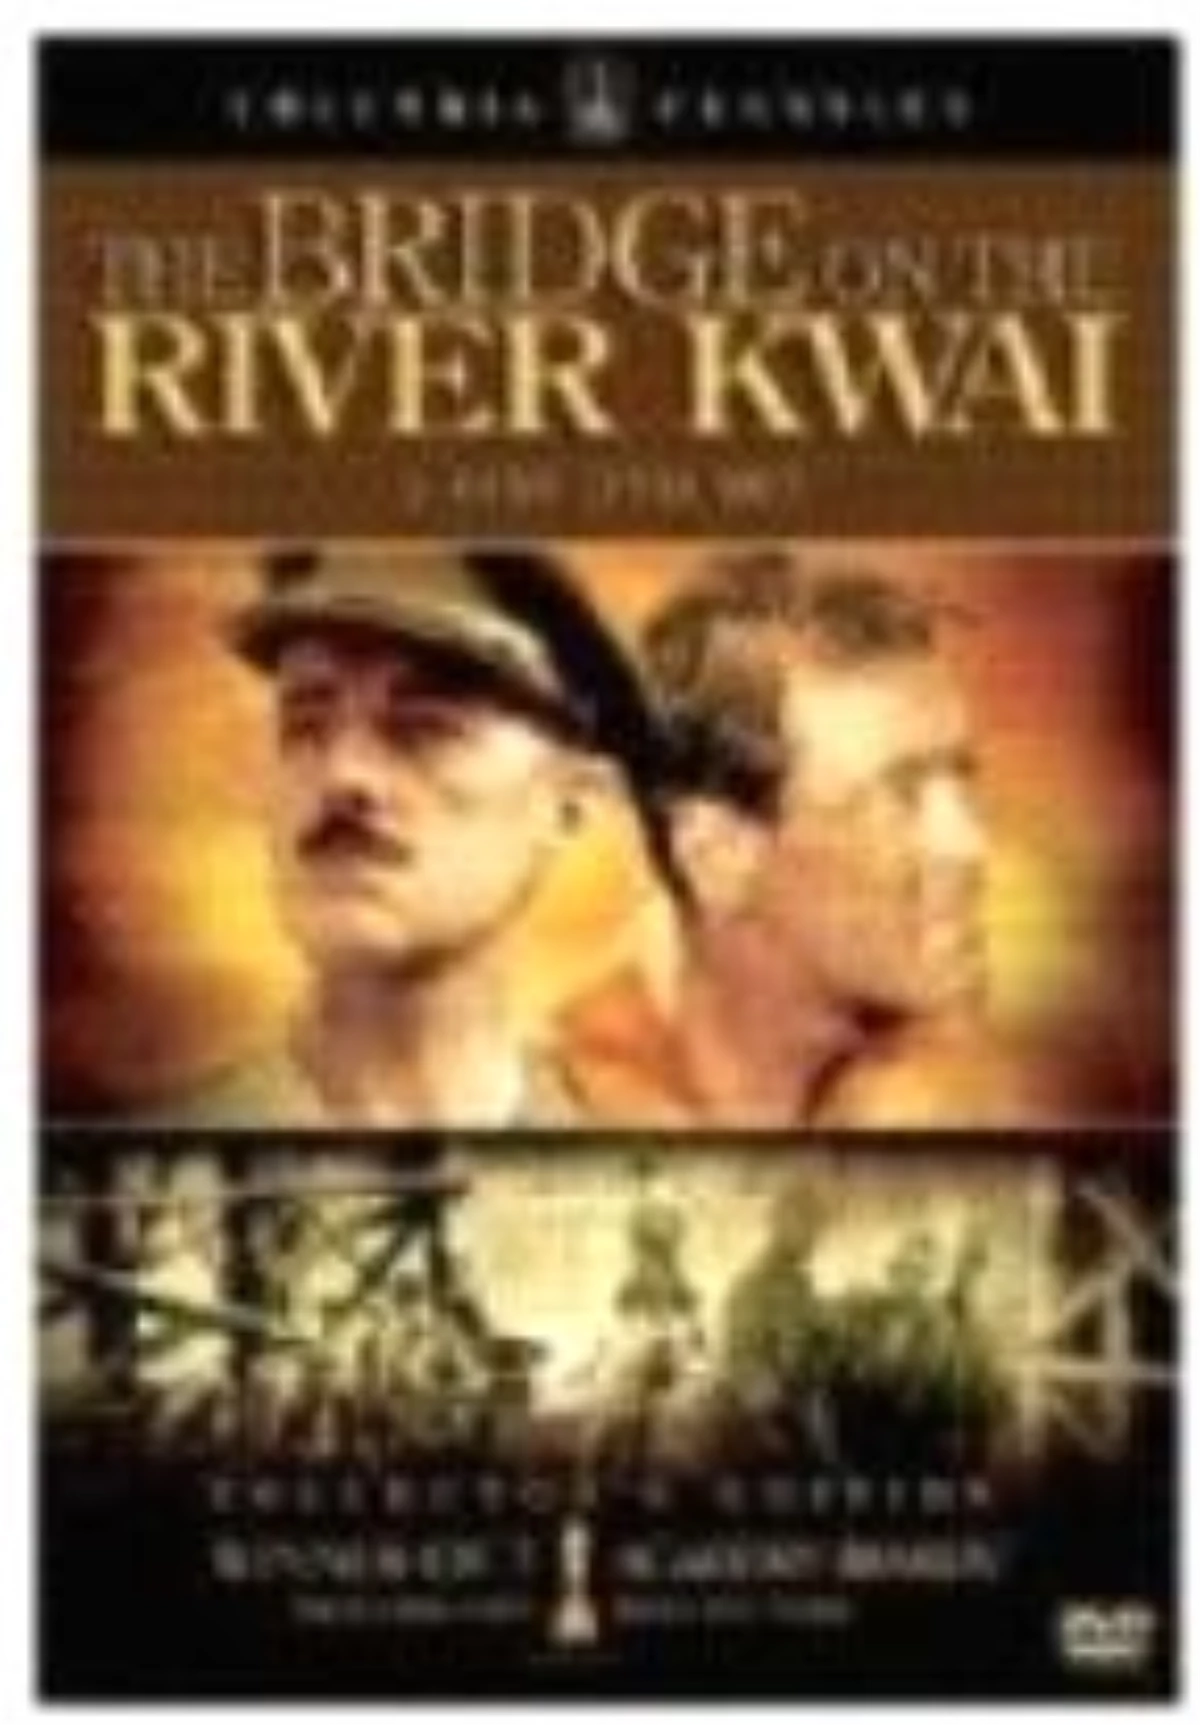 Kwai Köprüsü Filmi